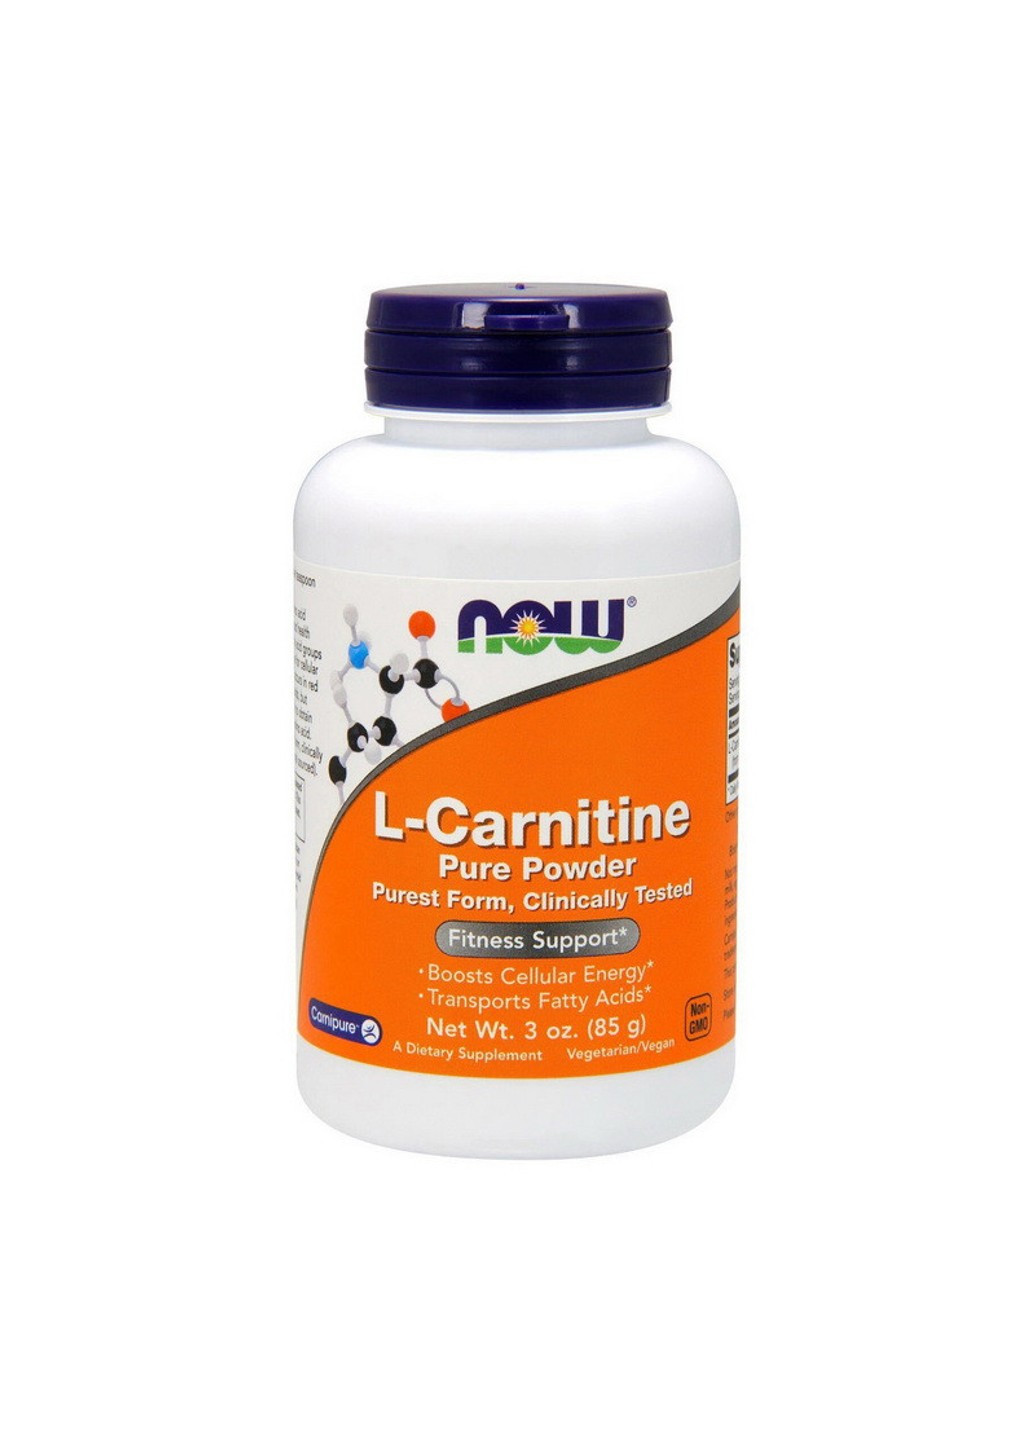 Л-карнитин L-Carnitine pure powder (85 g) нау фудс Now Foods (255362440)